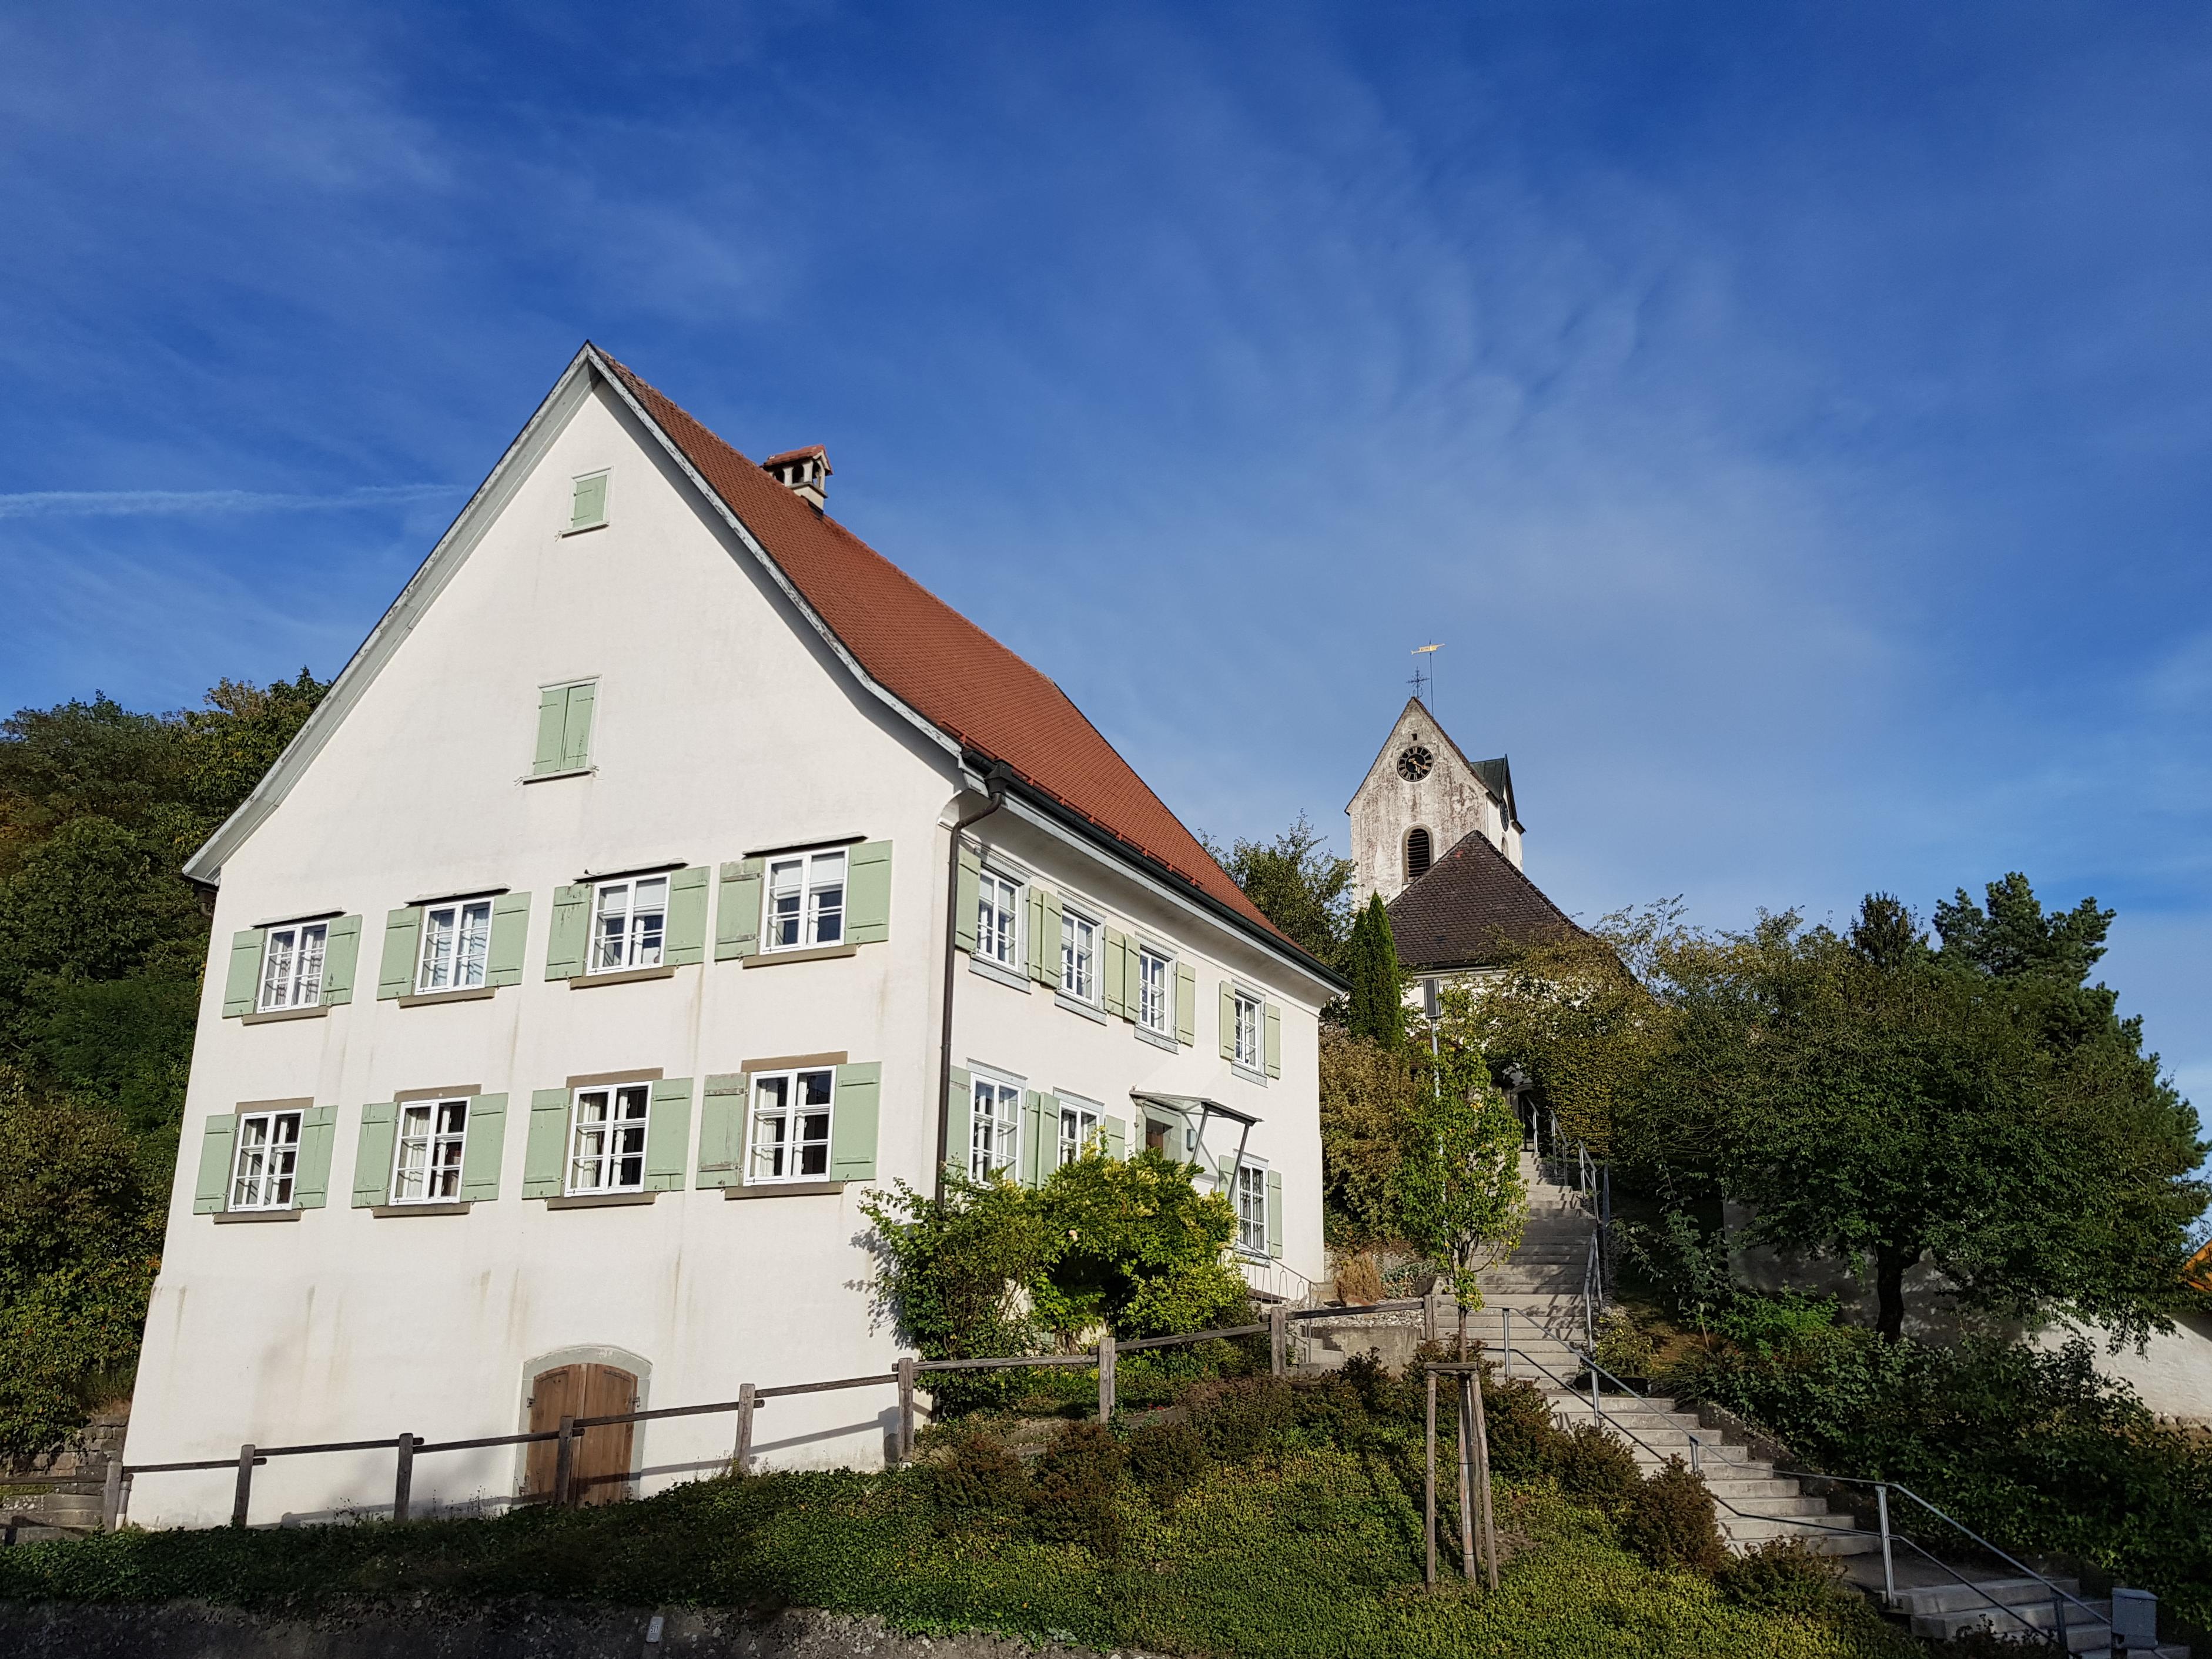                                                     Kirche Altheim                                    